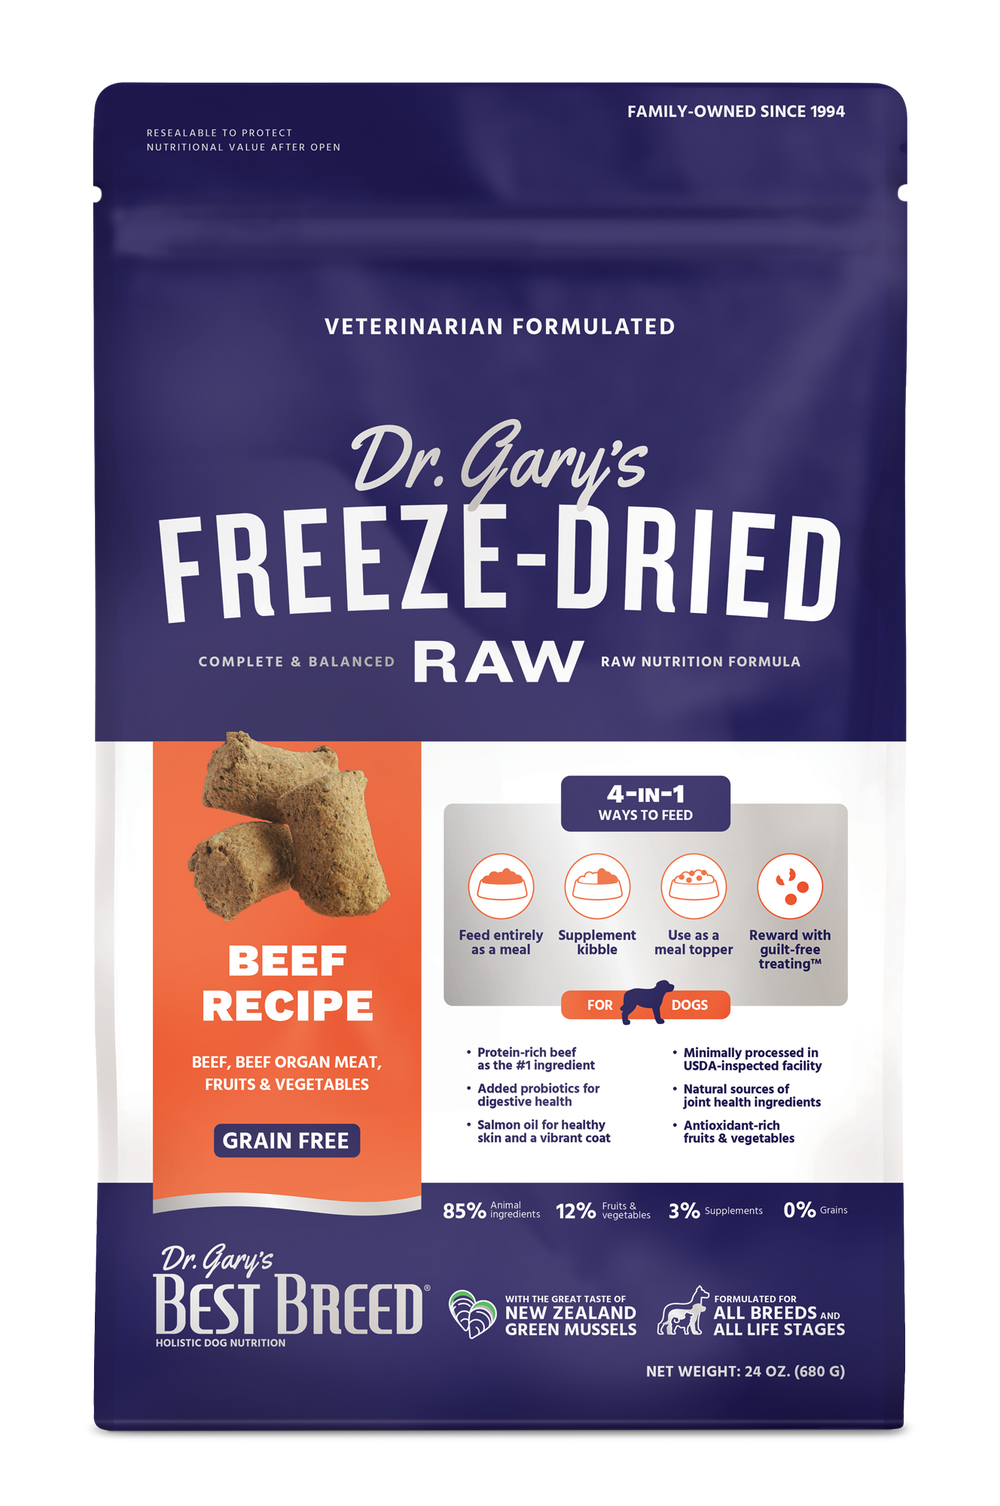 Best Breed Freeze-dried Beef Recipe